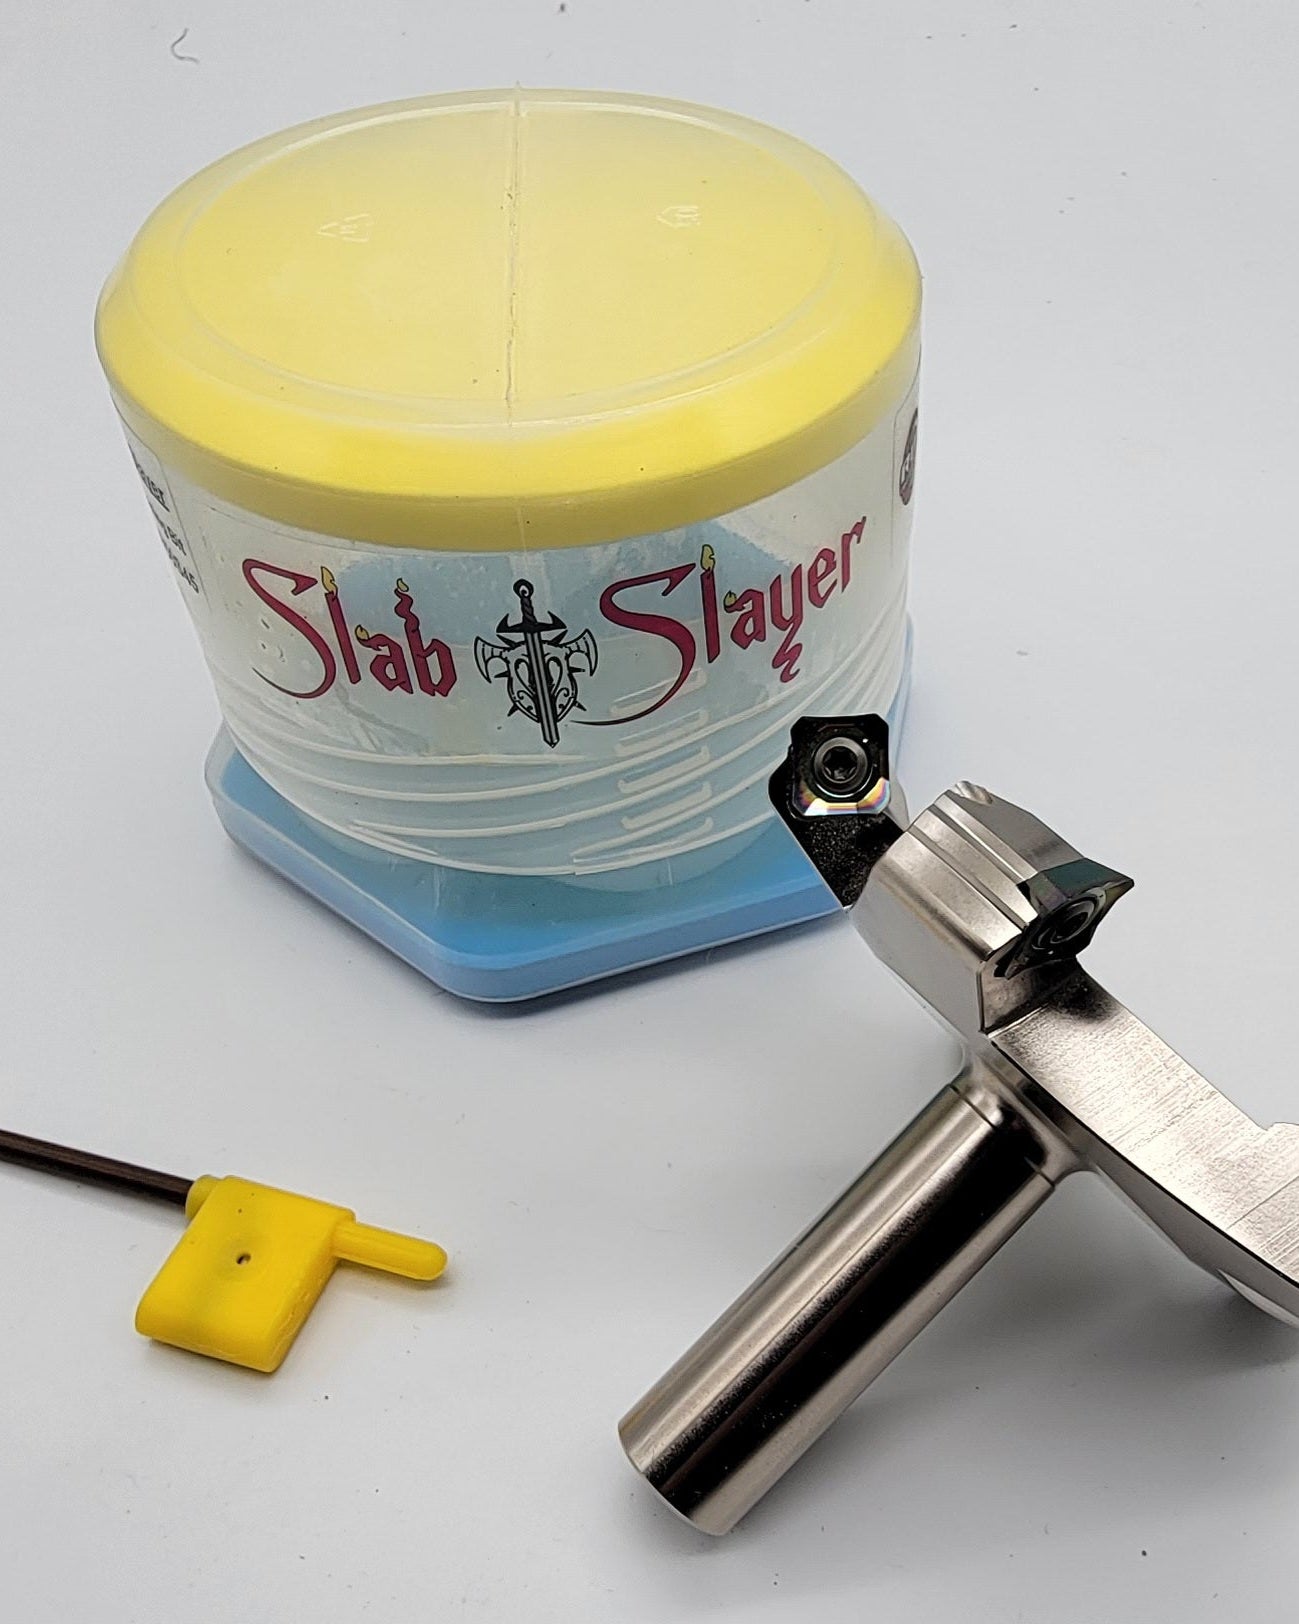 R.I.P. Precision Tools 3.75" Surfacing Bit - Slab Slayer- 3/4" Shank | Flattening Bit | Hamilton Lee Supply